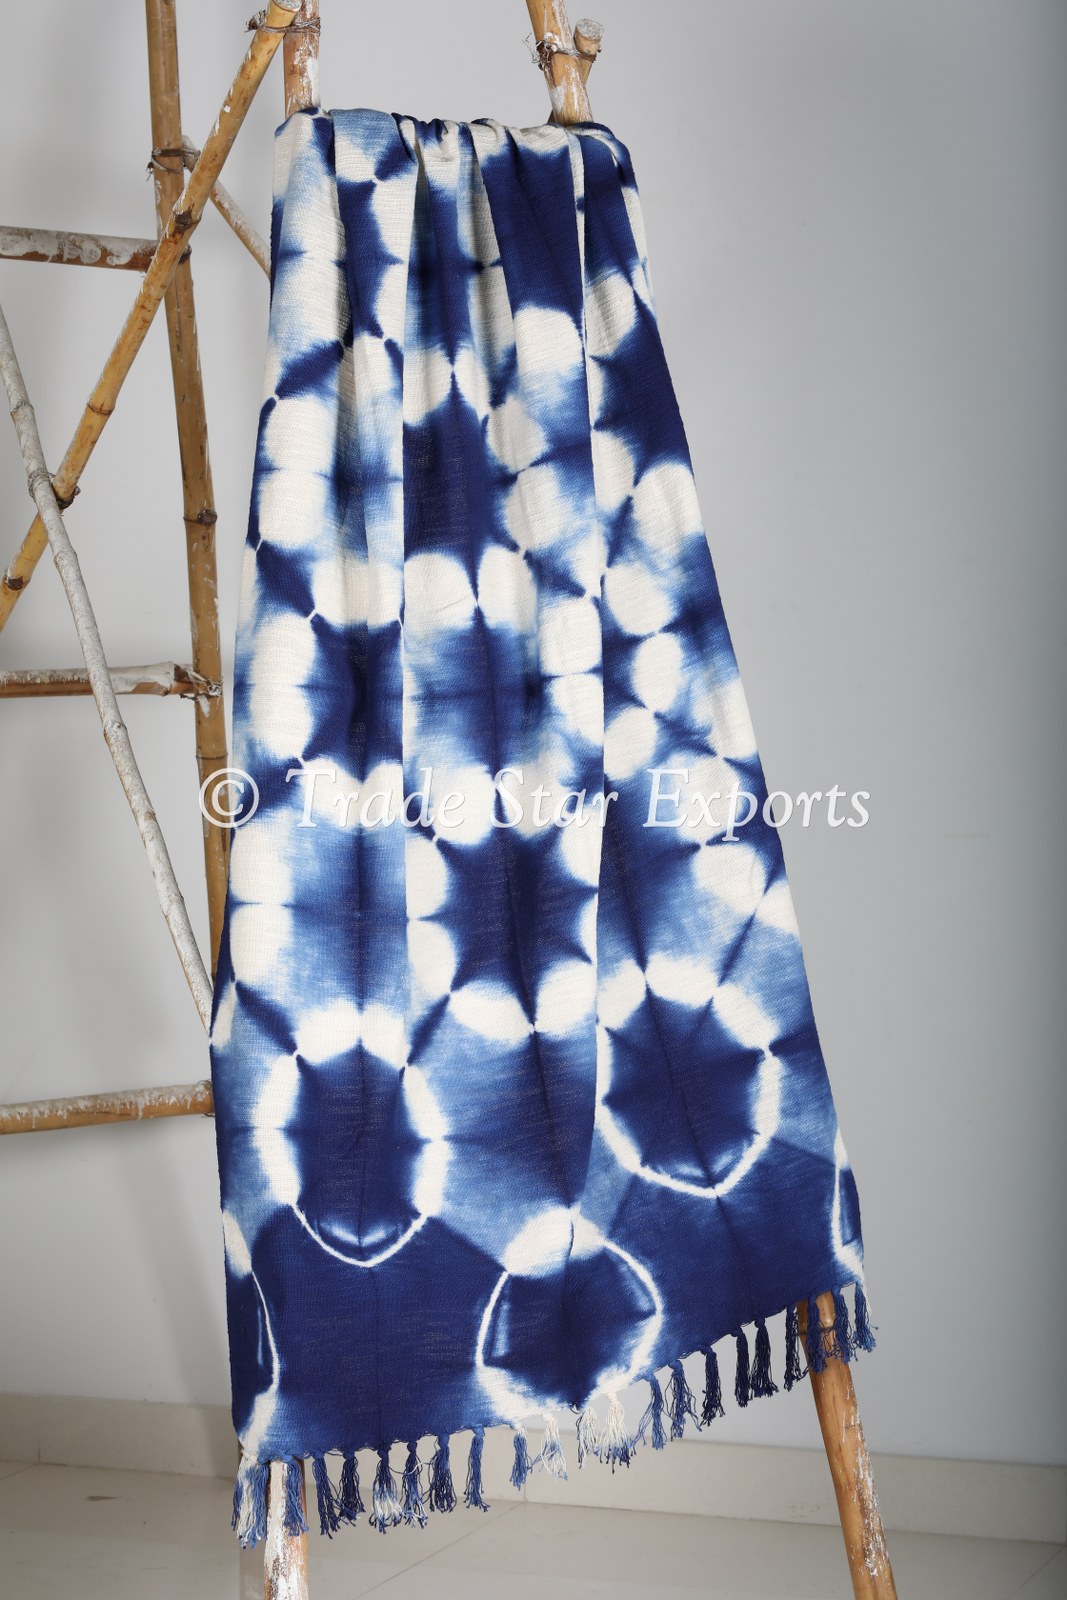 Details about   Authentic Cotton Sofa Throw Blanket Tie Dye Handloom Travel Wrap Shibori Blanket 